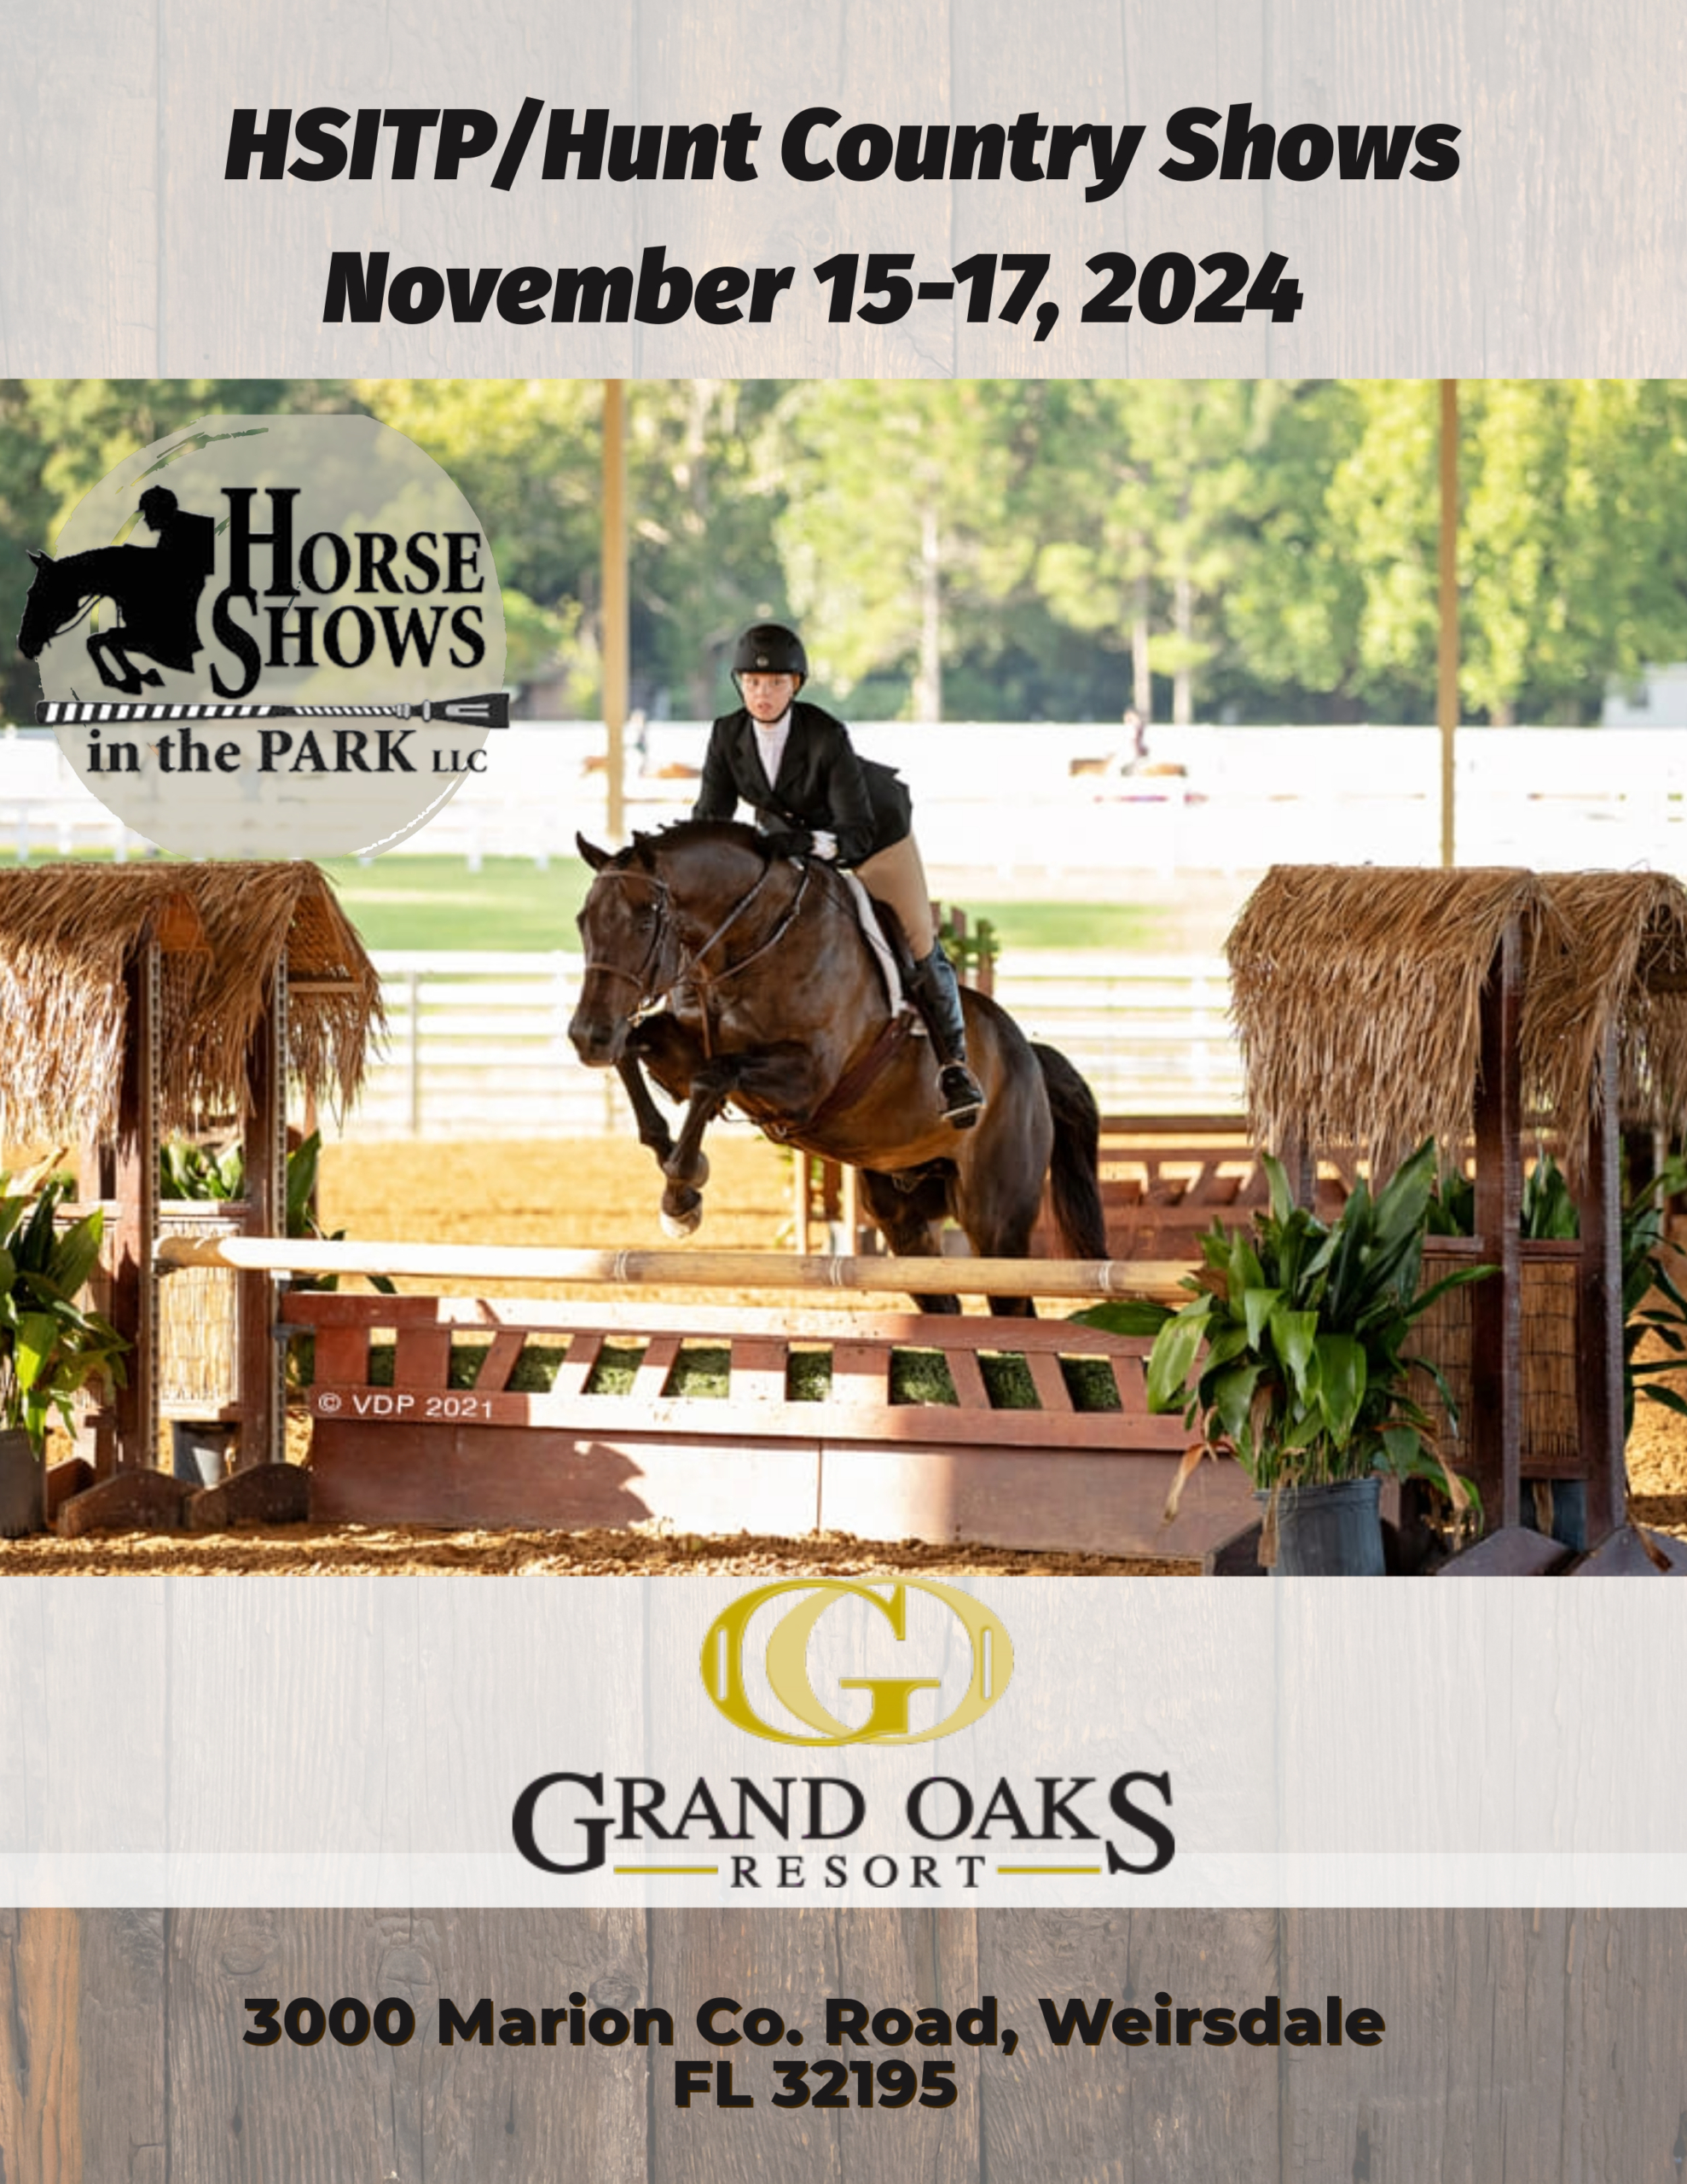 HSITP Hunter Jumper horse show at the Grand Oaks Resort